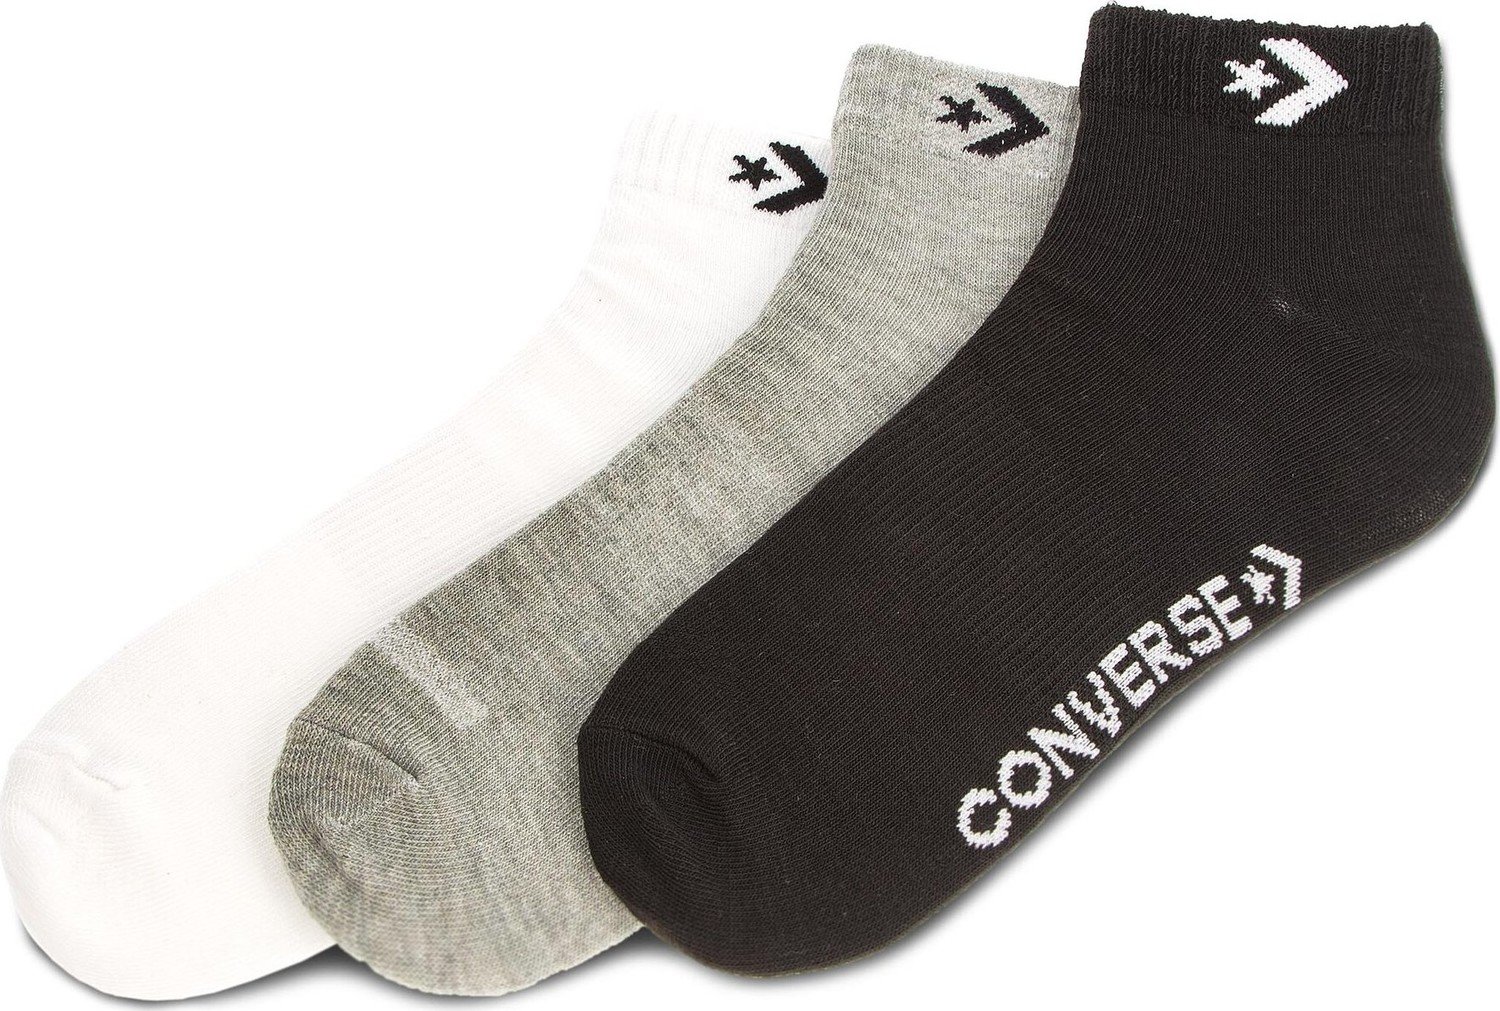 Sada 3 párů nízkých ponožek unisex Converse E746A-3020 Bílá